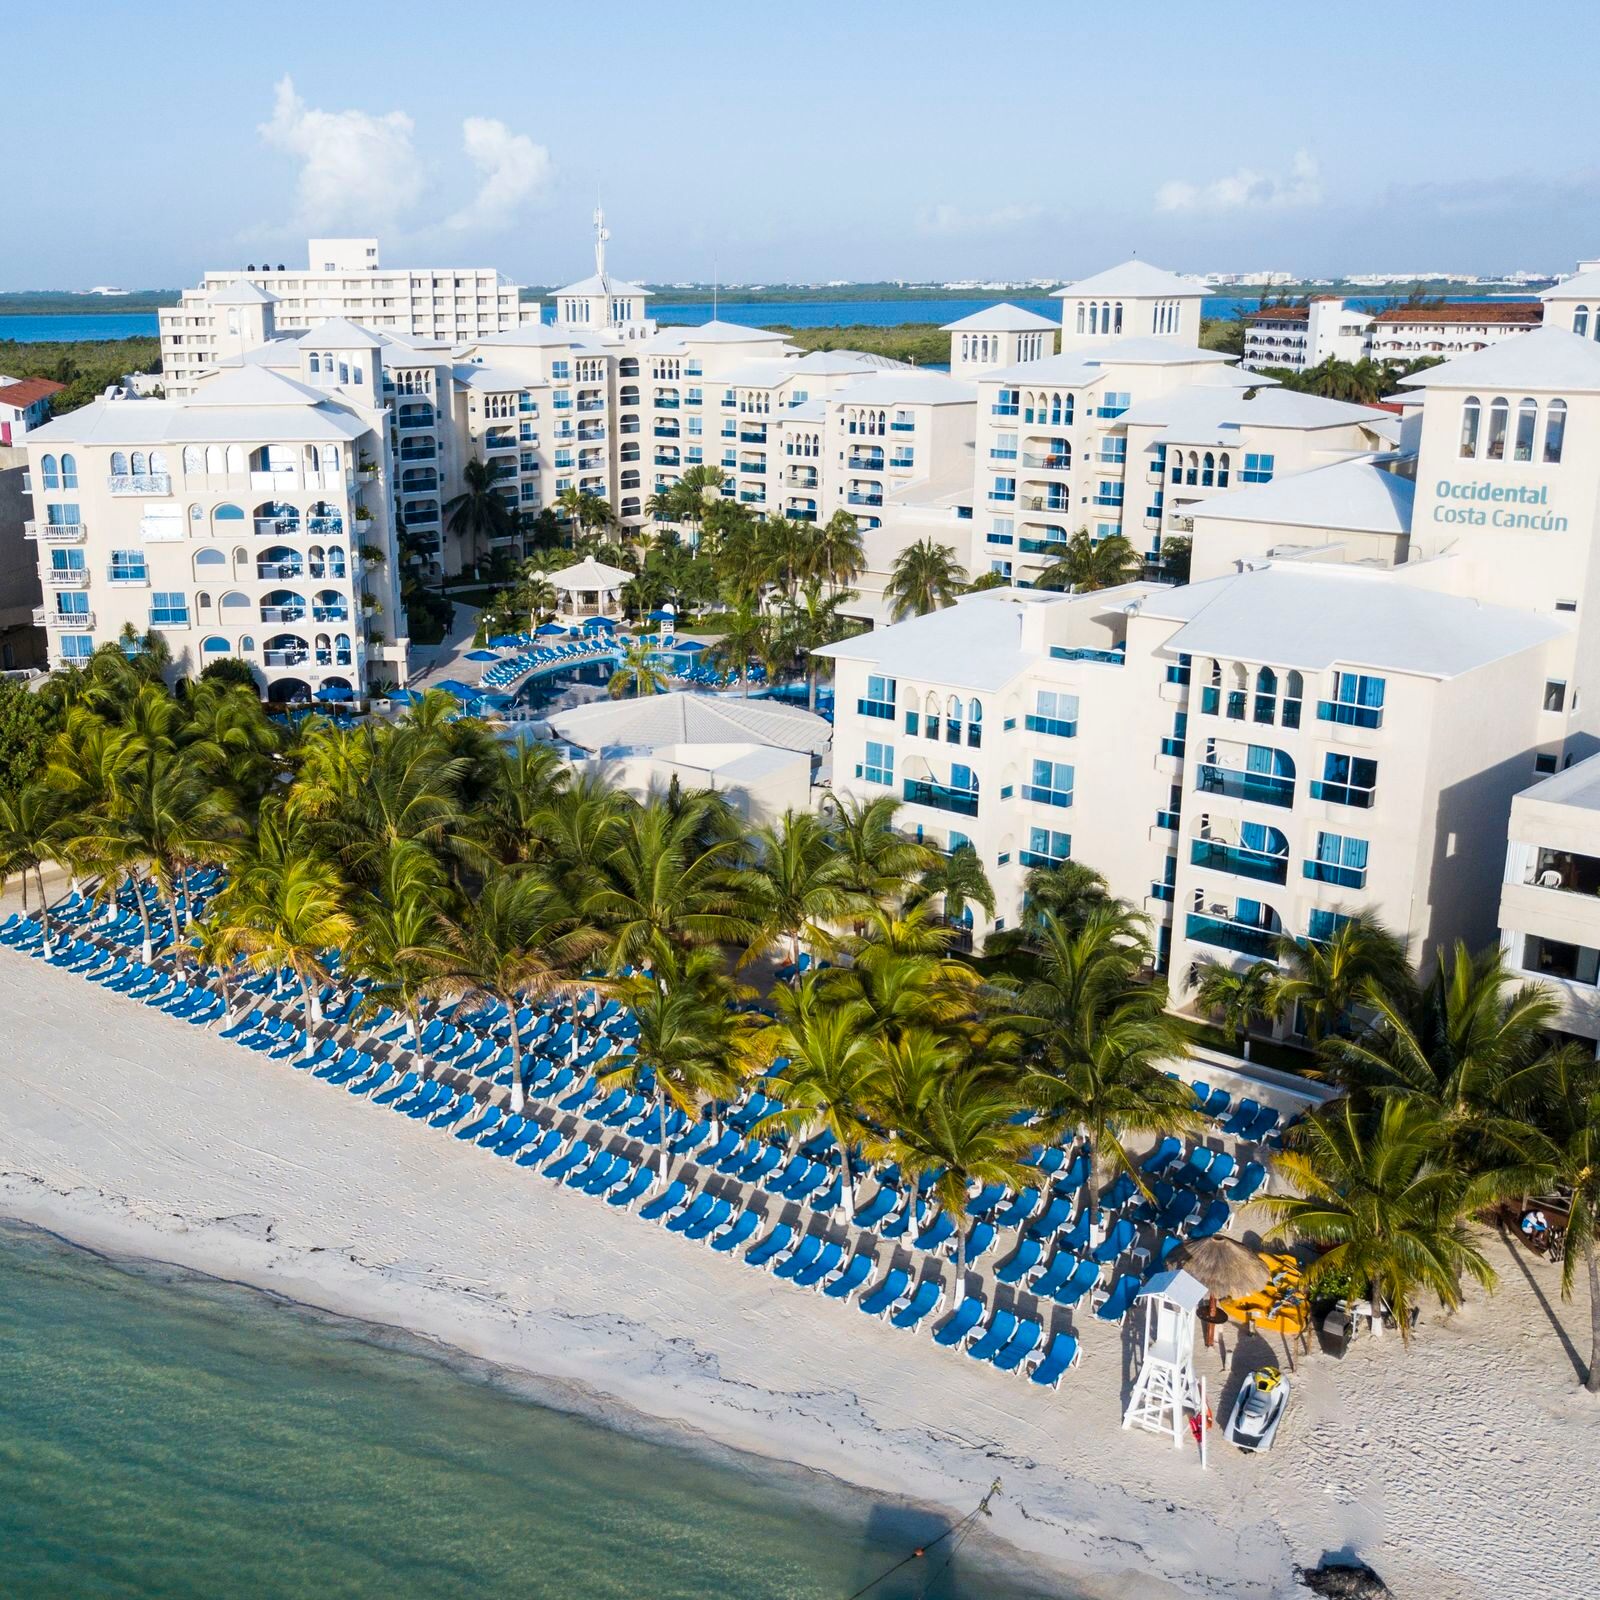 Hotels for families at Playa Linda, Cancún, Mexico